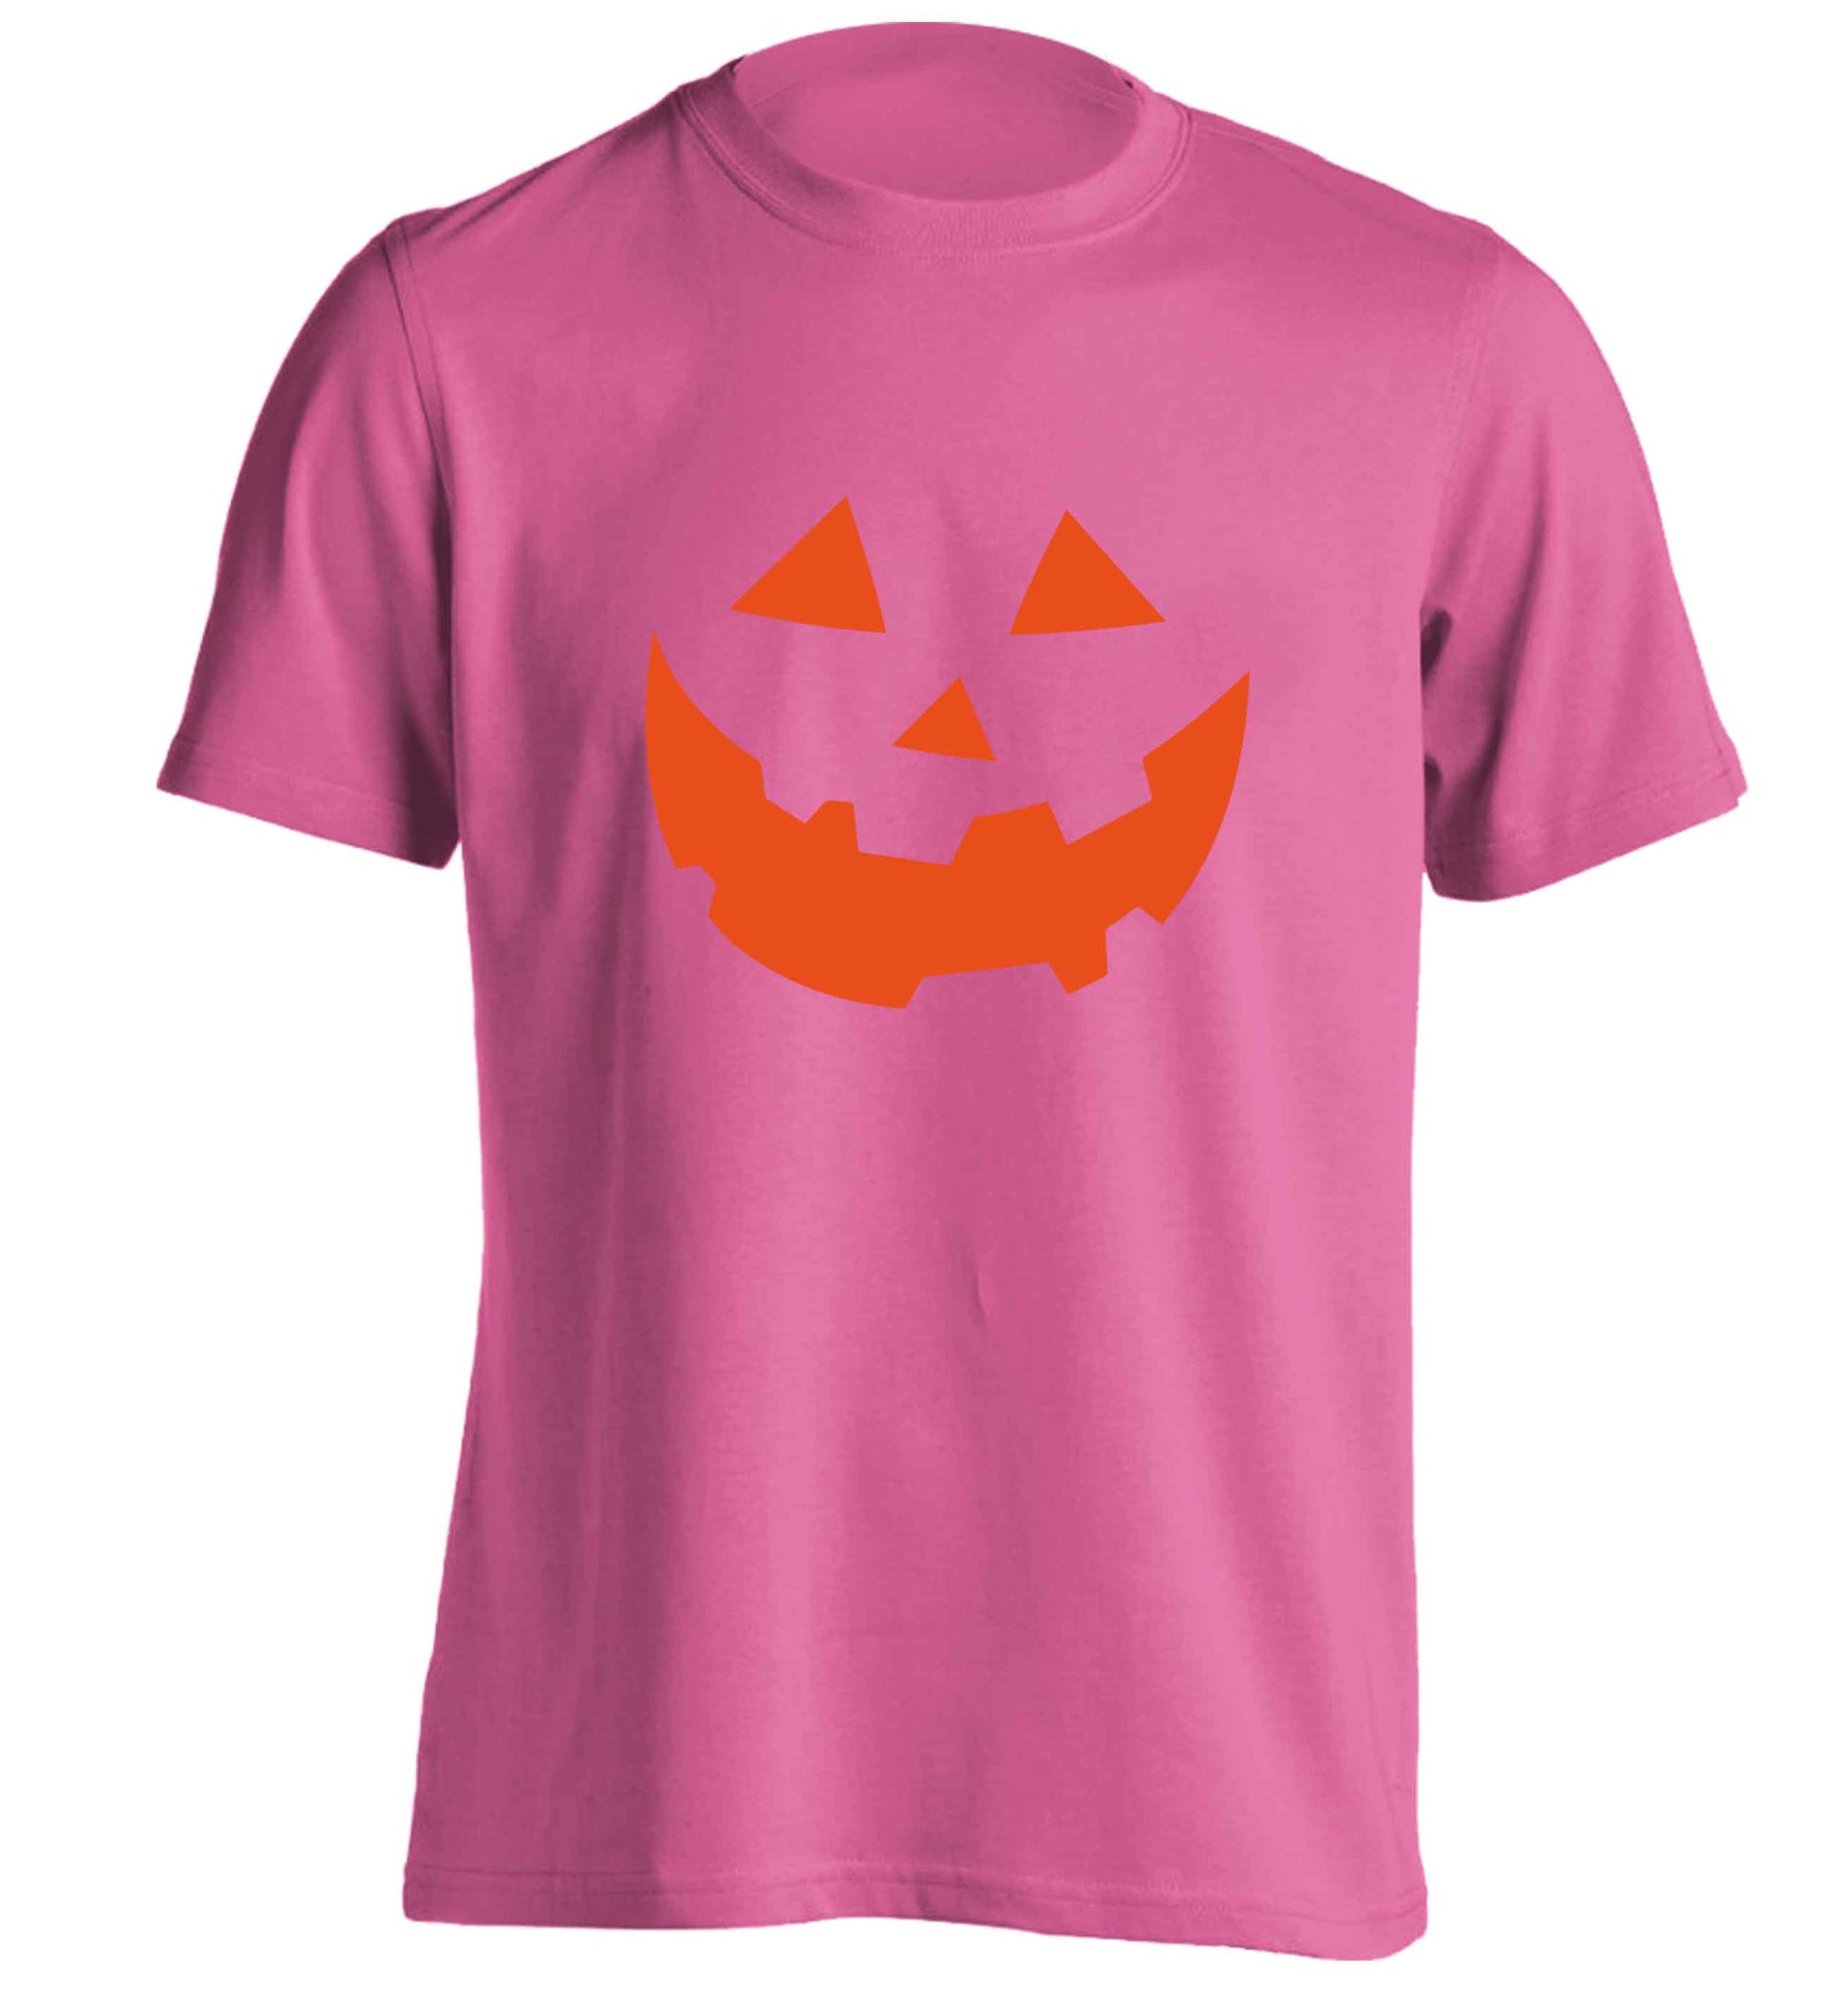 Pumpkin Spice Nice adults unisex pink Tshirt 2XL